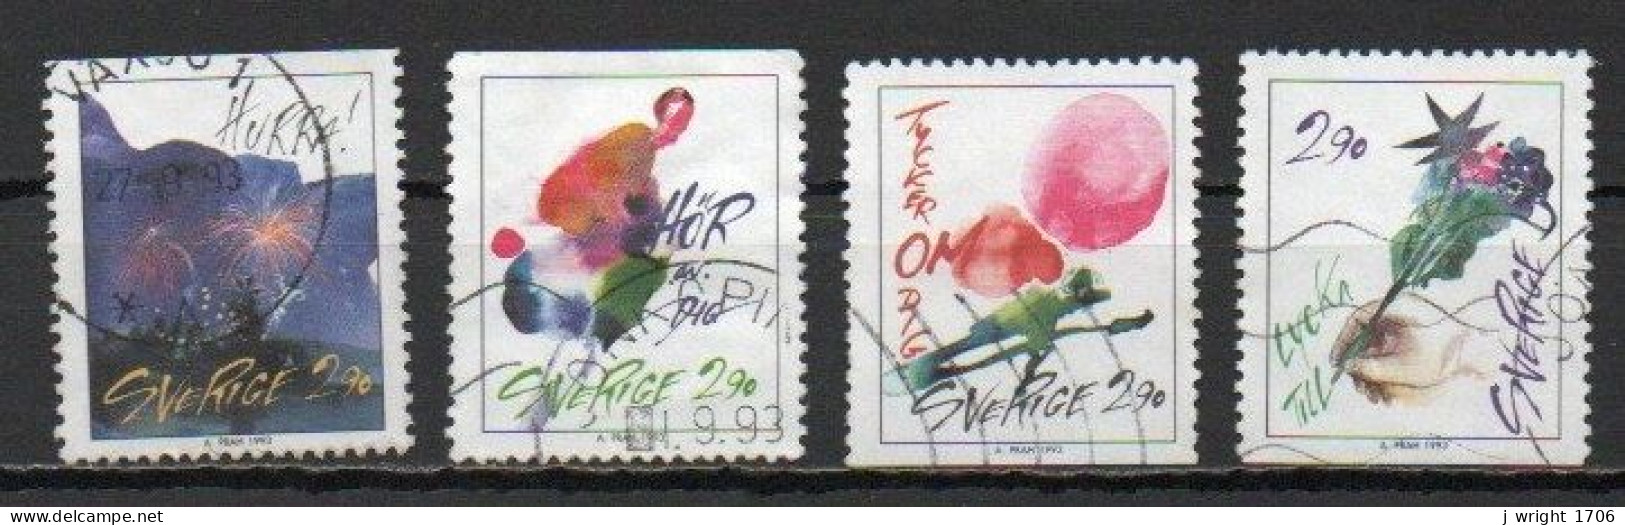 Sweden, 1993, Greetings Stamps, Set, USED - Usados